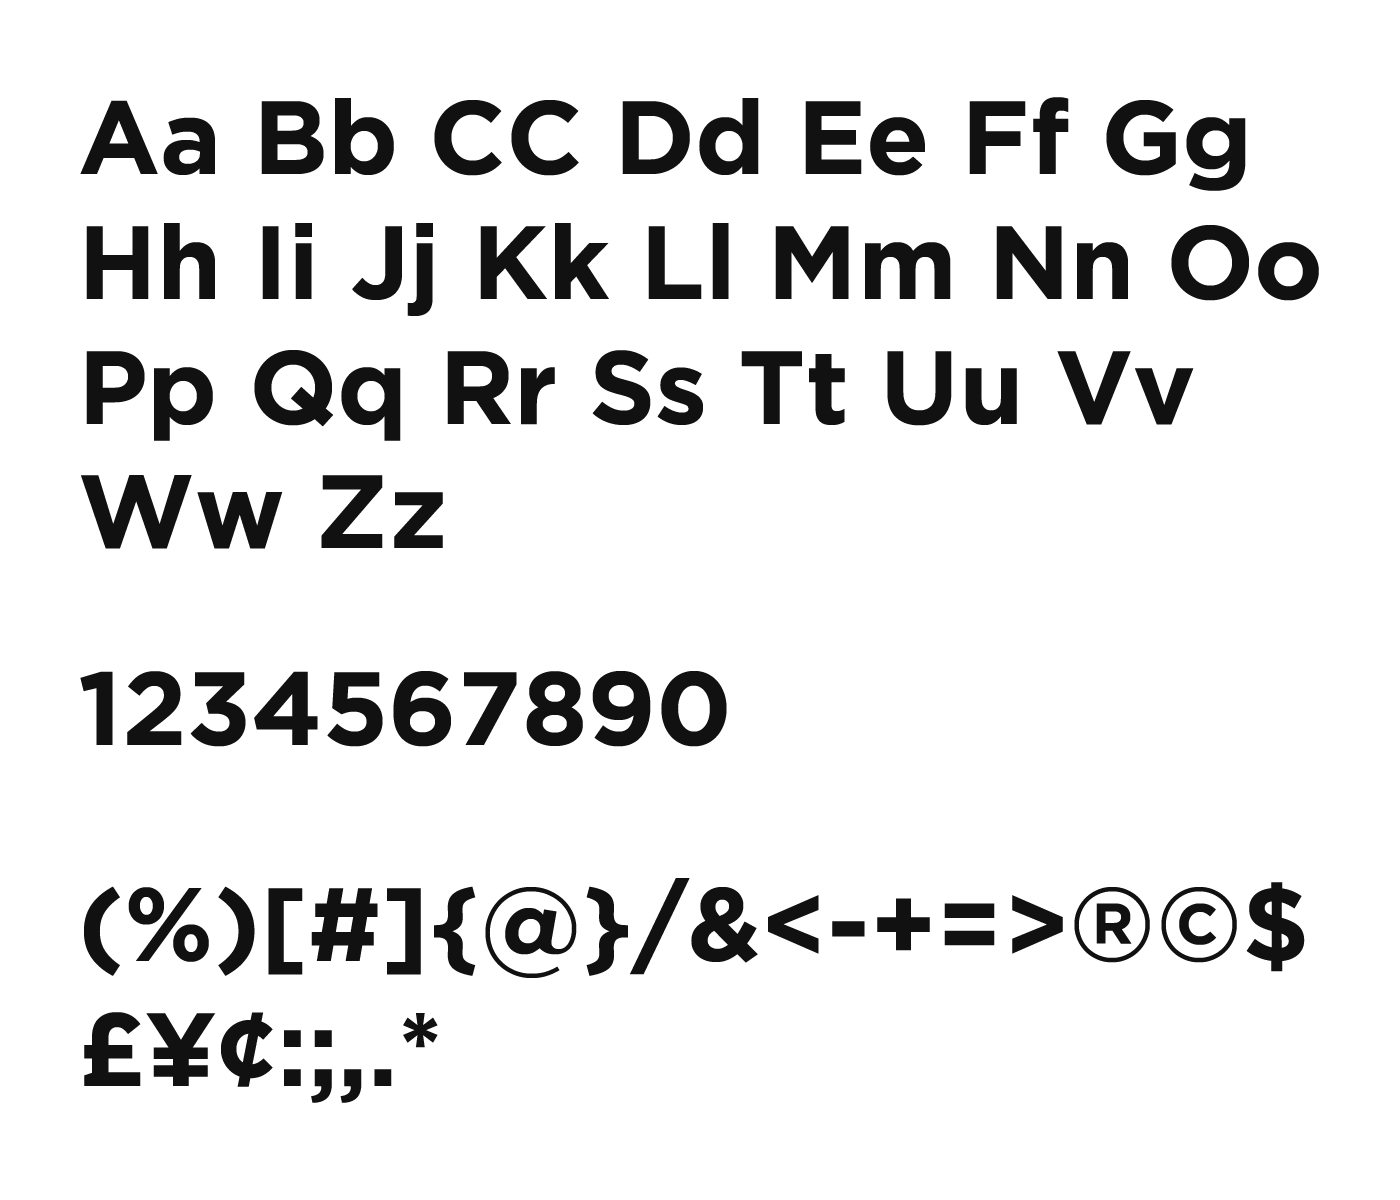 gotham typeface sample